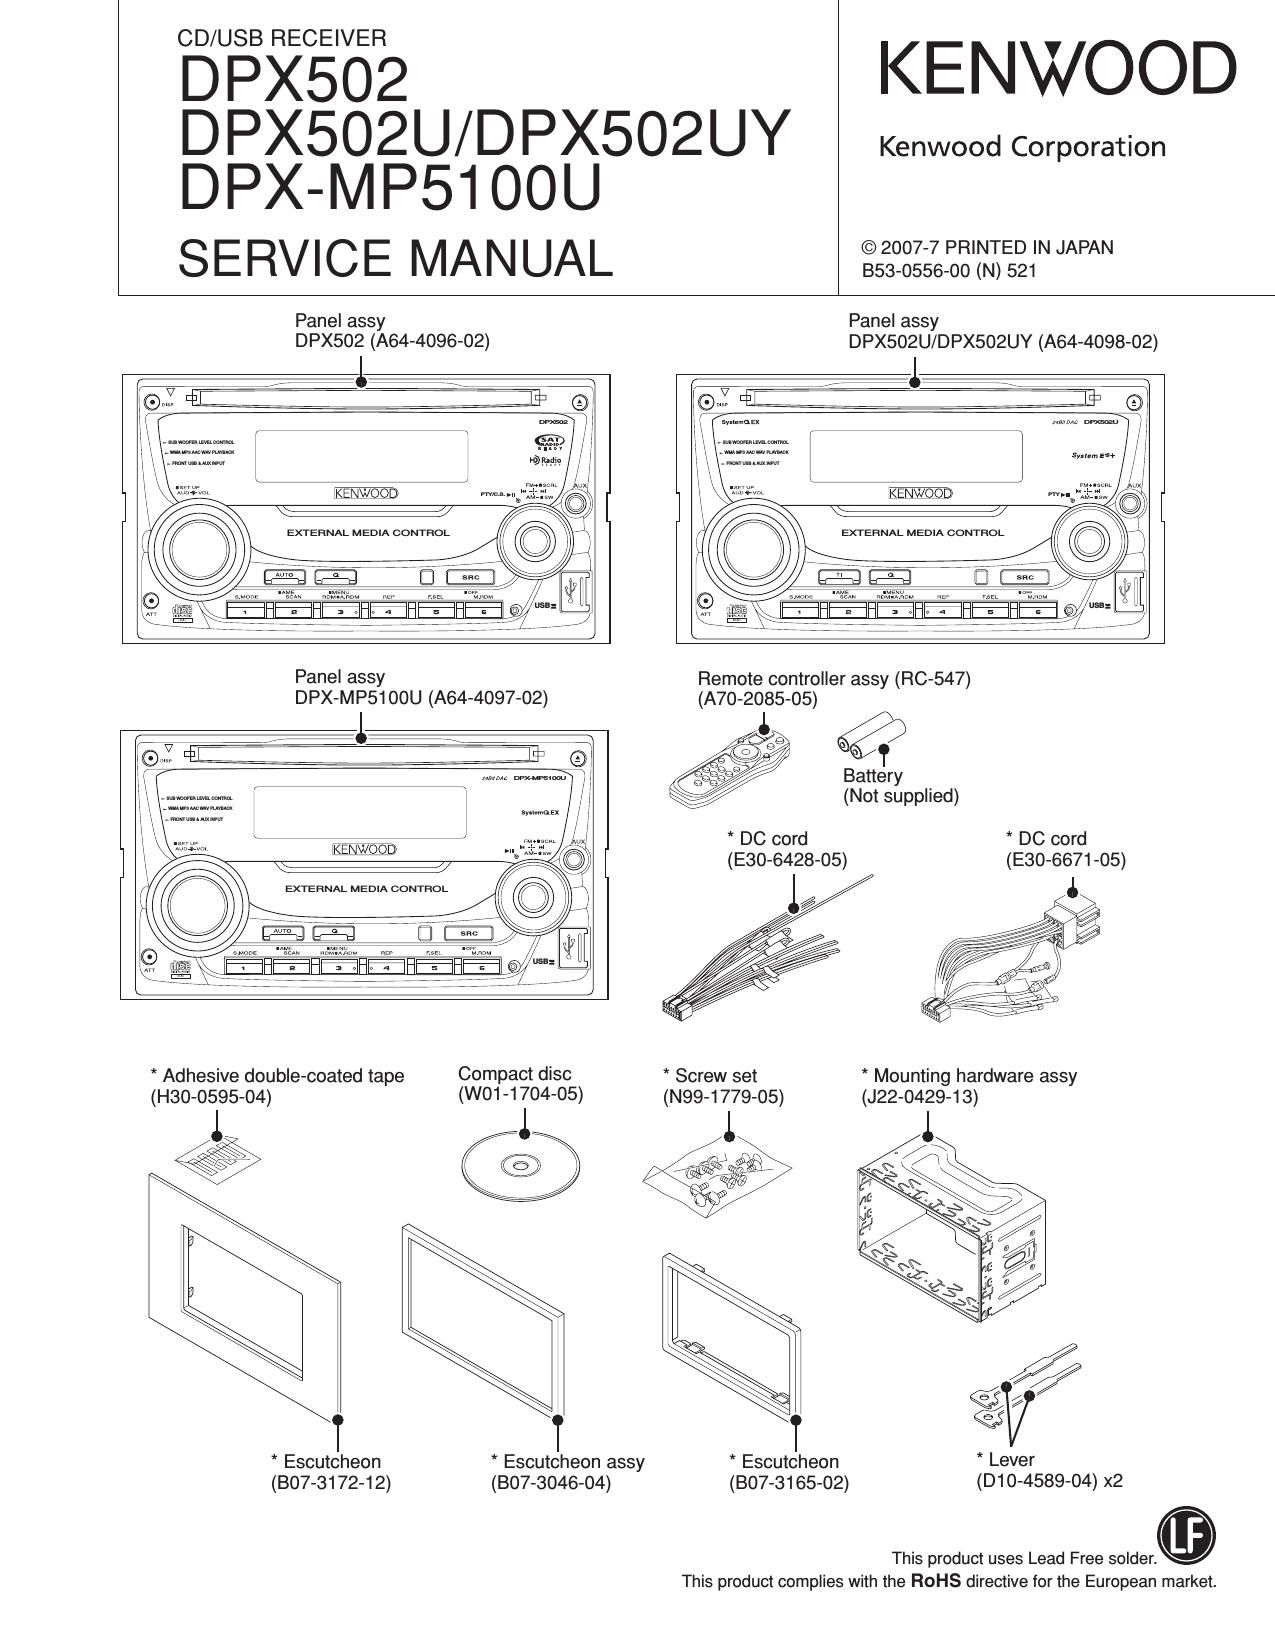 Kenwood DPX 502 UY Service Manual